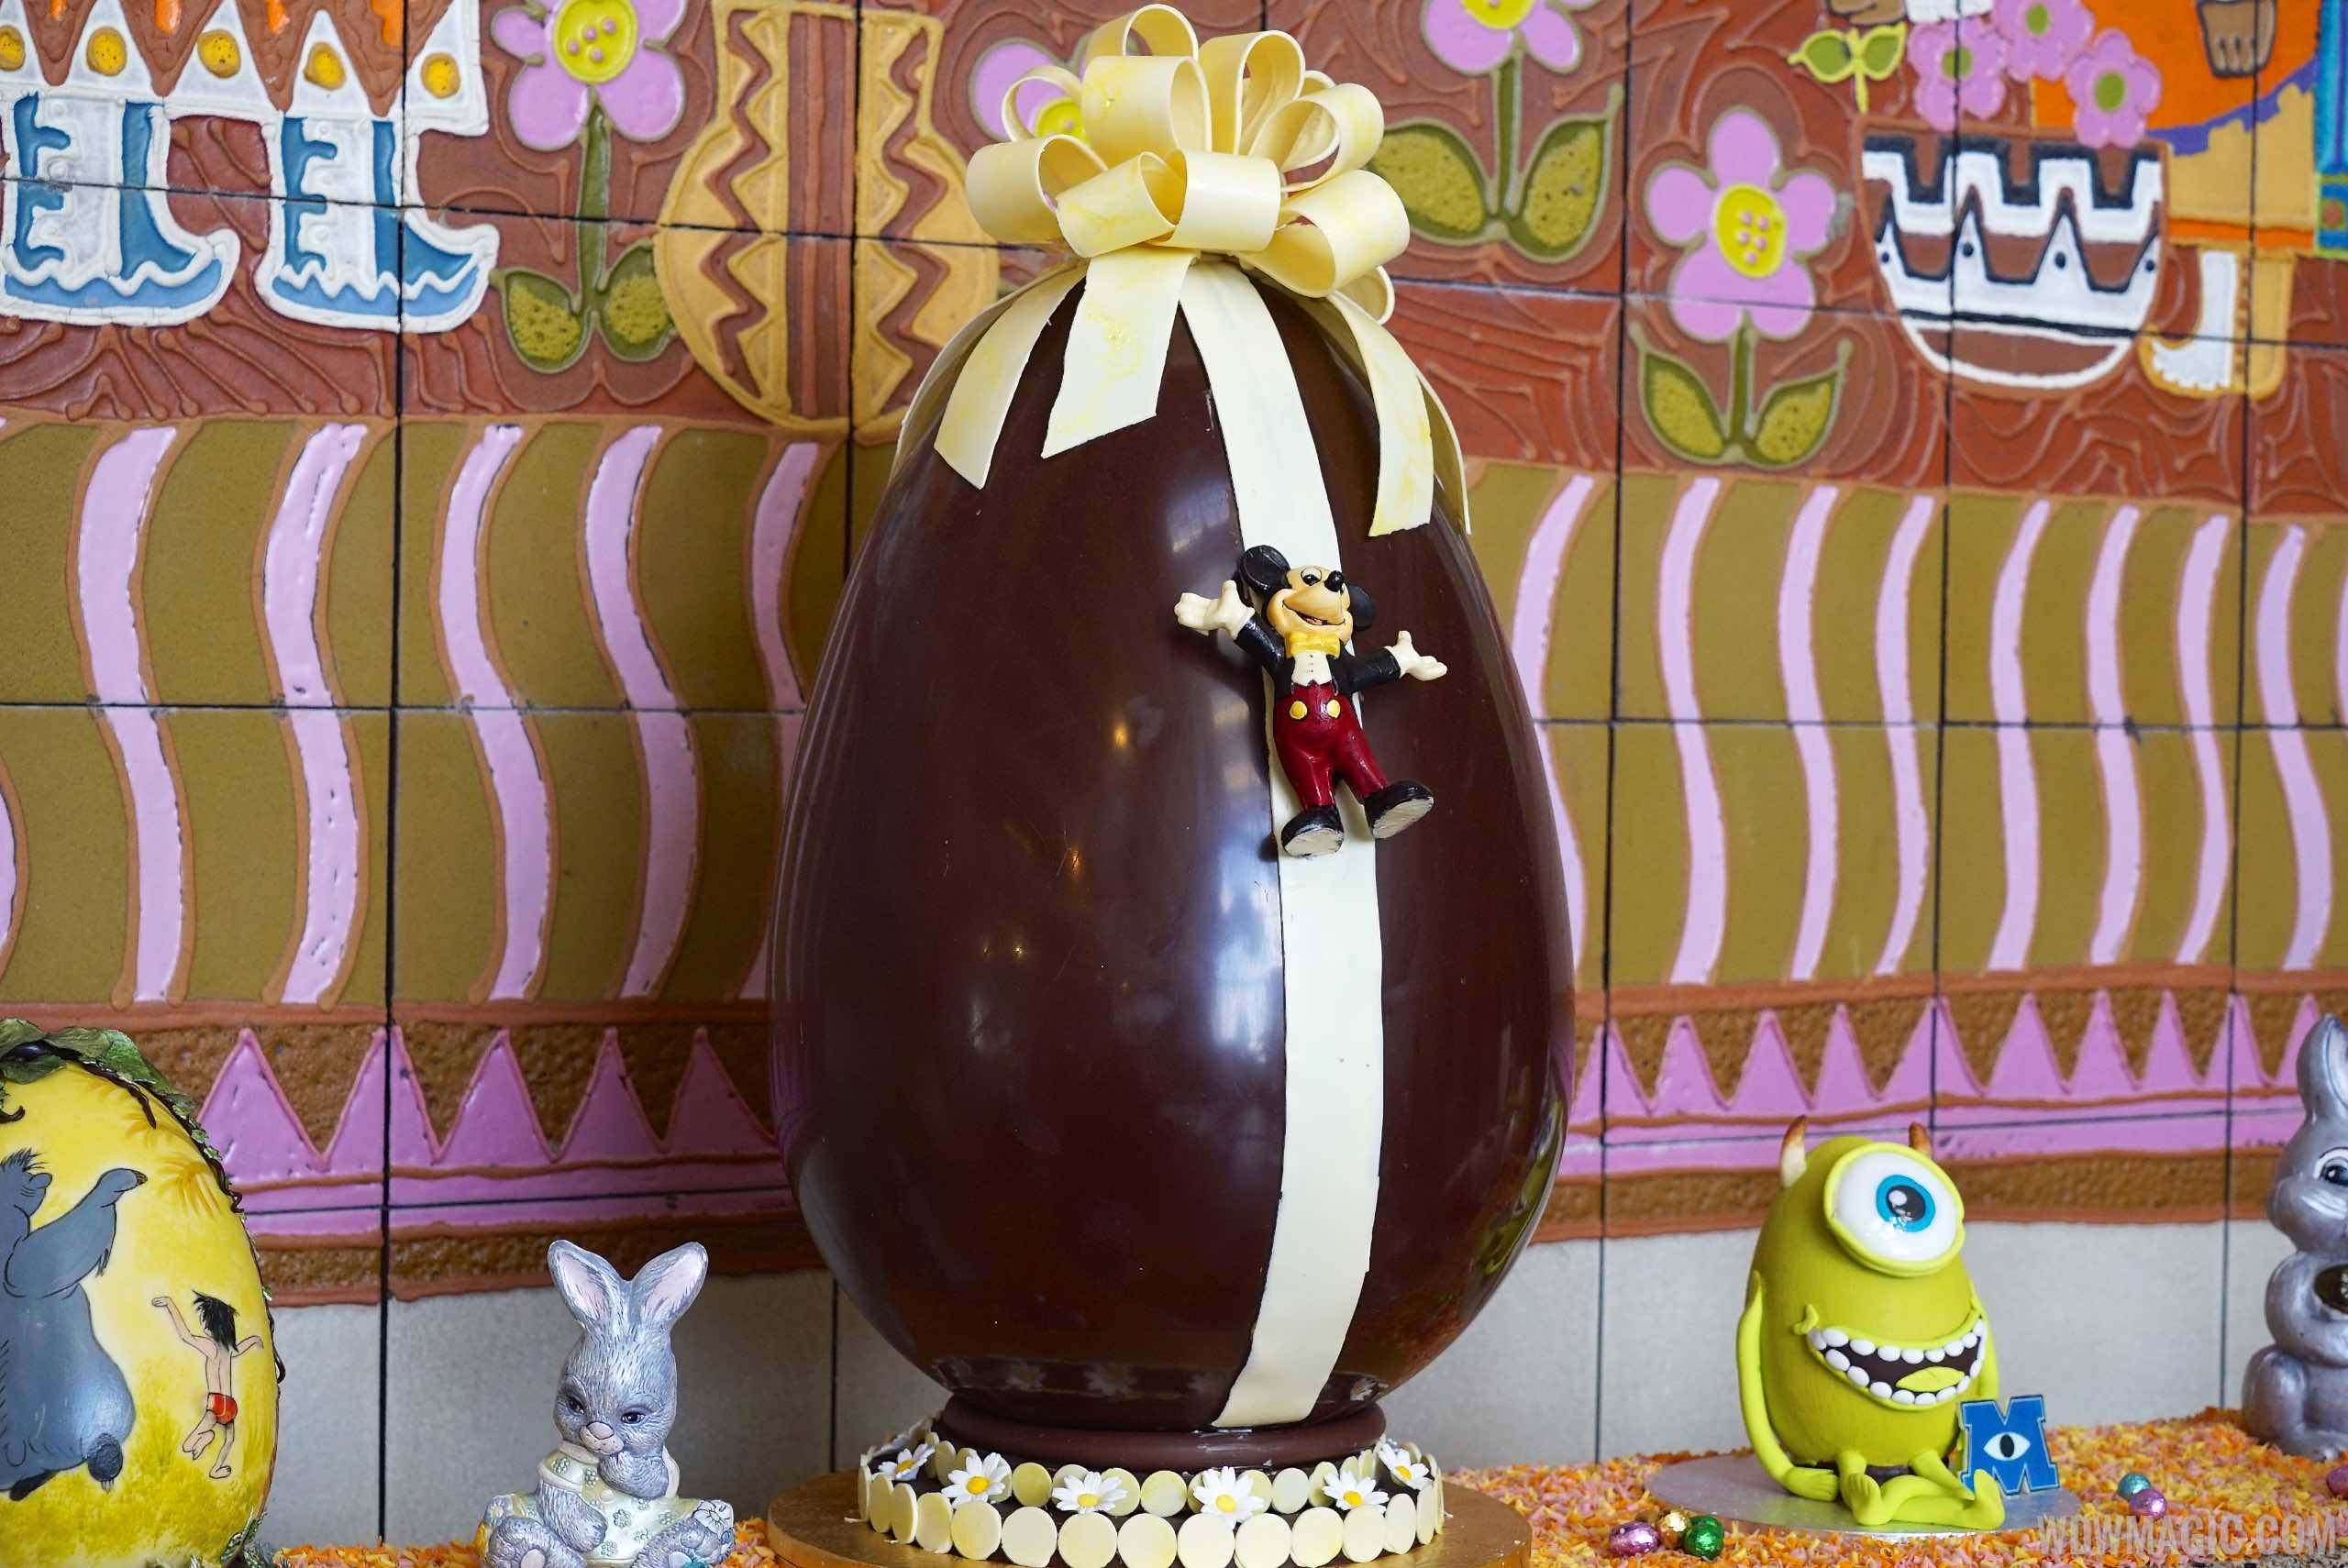 PHOTOS - Disney's Contemporary Resort Easter Egg display